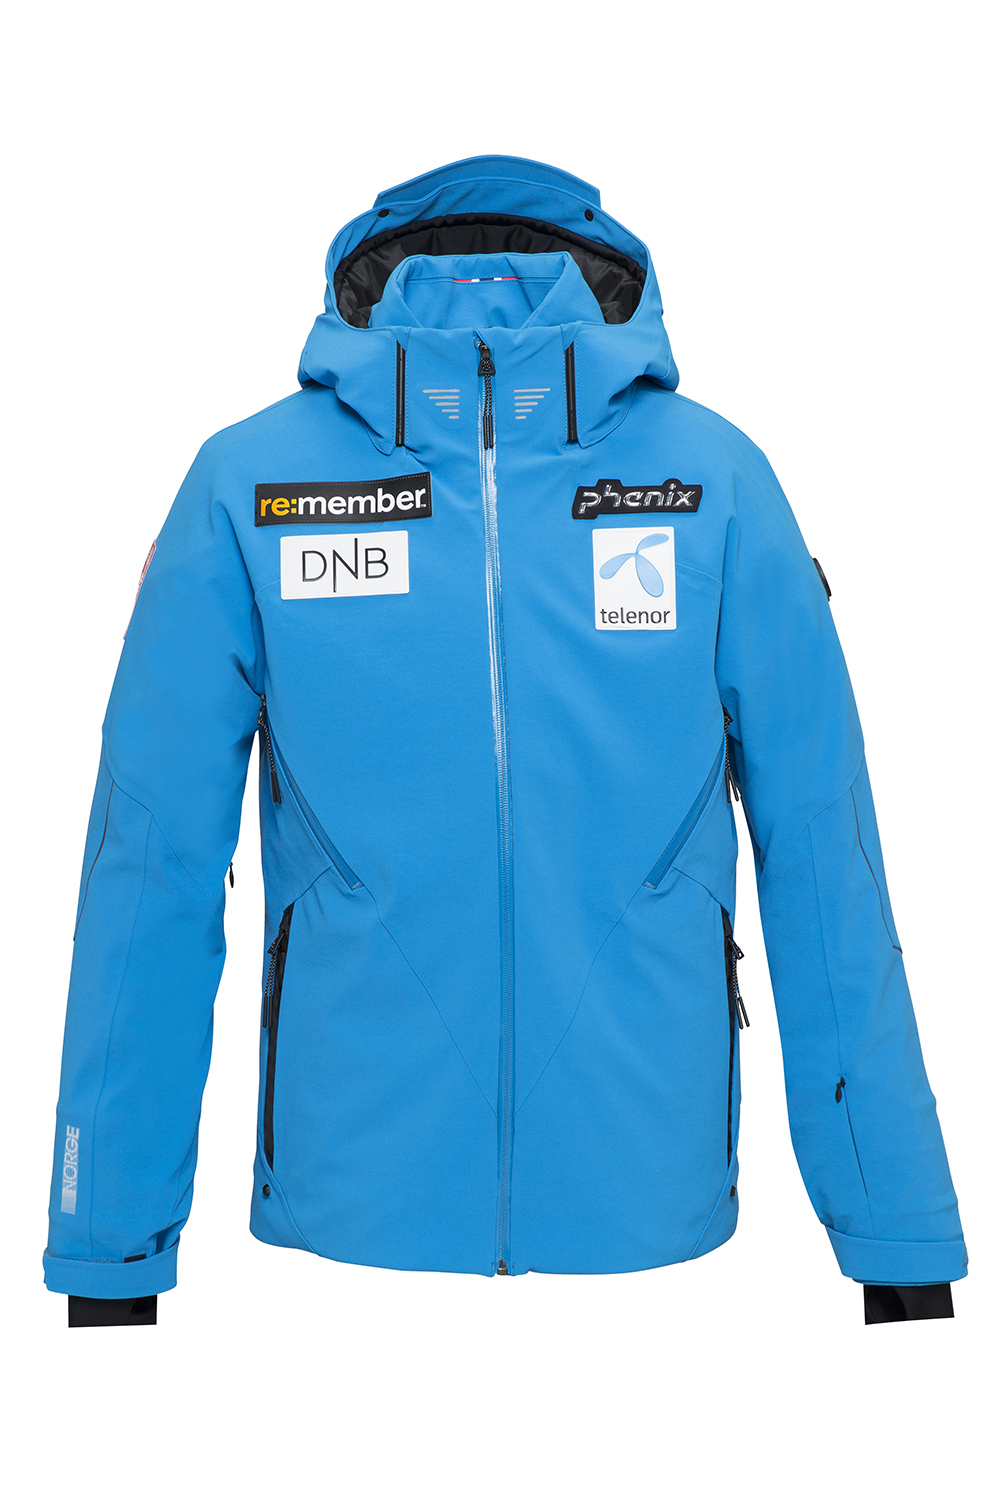 Phenix Norway Alpine Team Jacket (Navy Blue m logo)-0